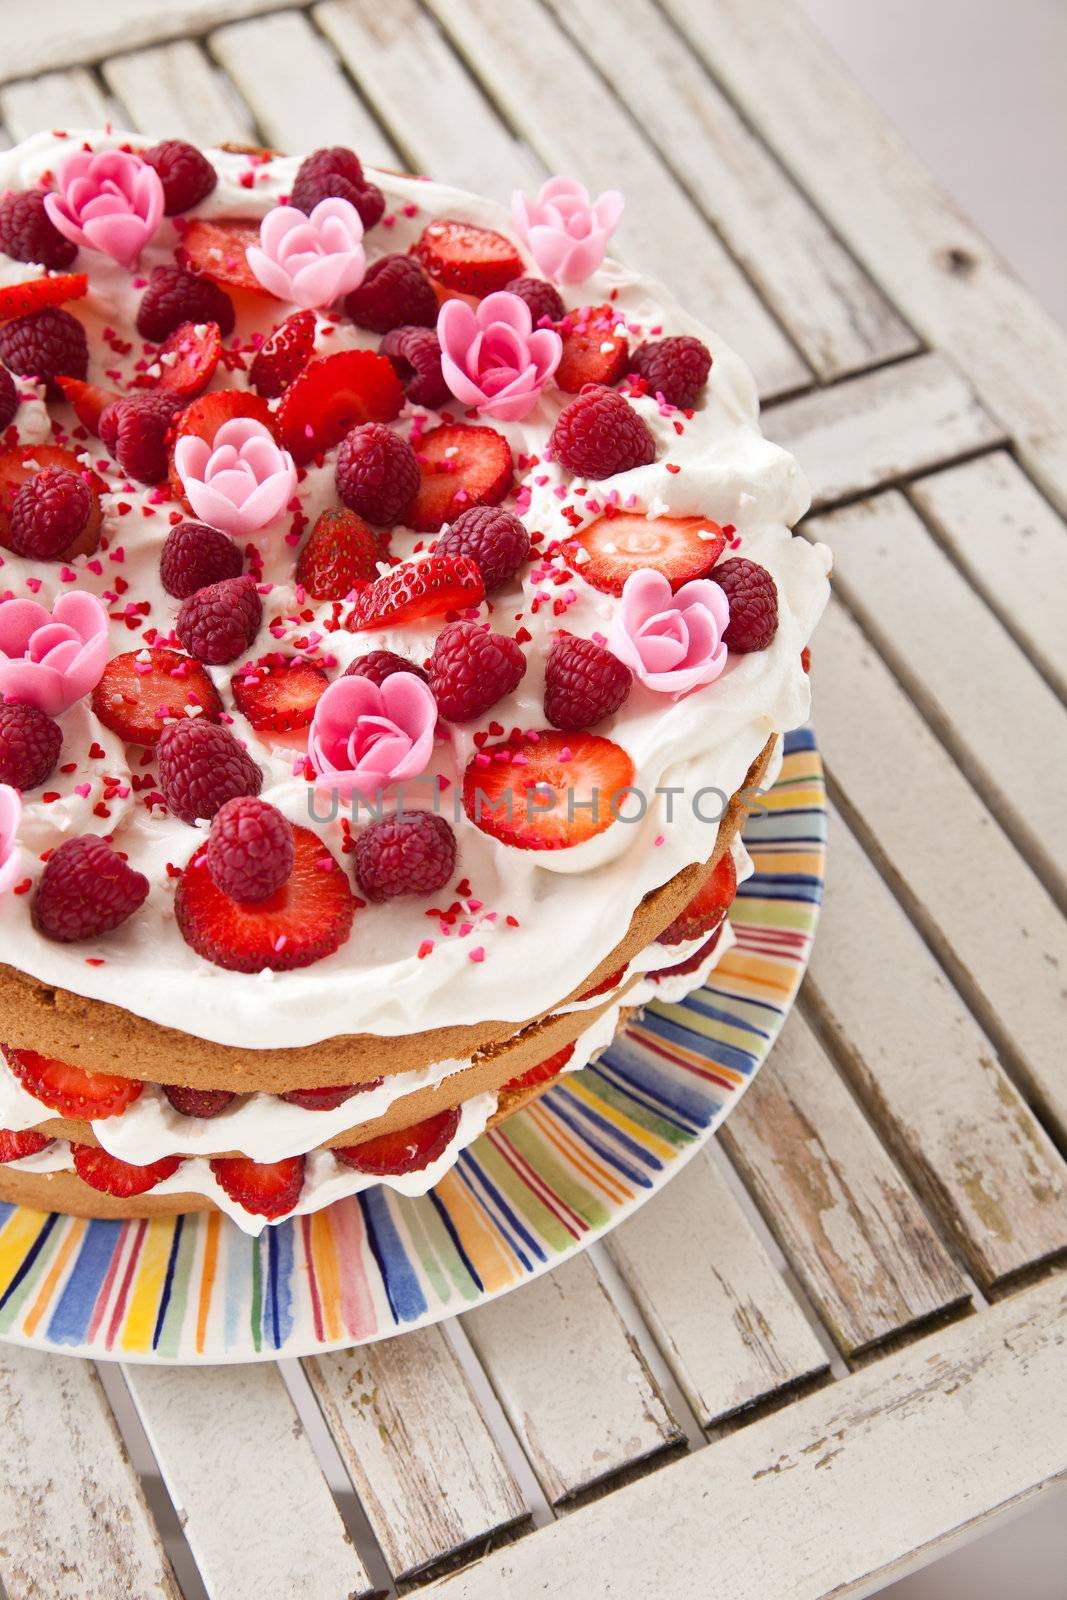 Colorful birthday cake by Fotosmurf